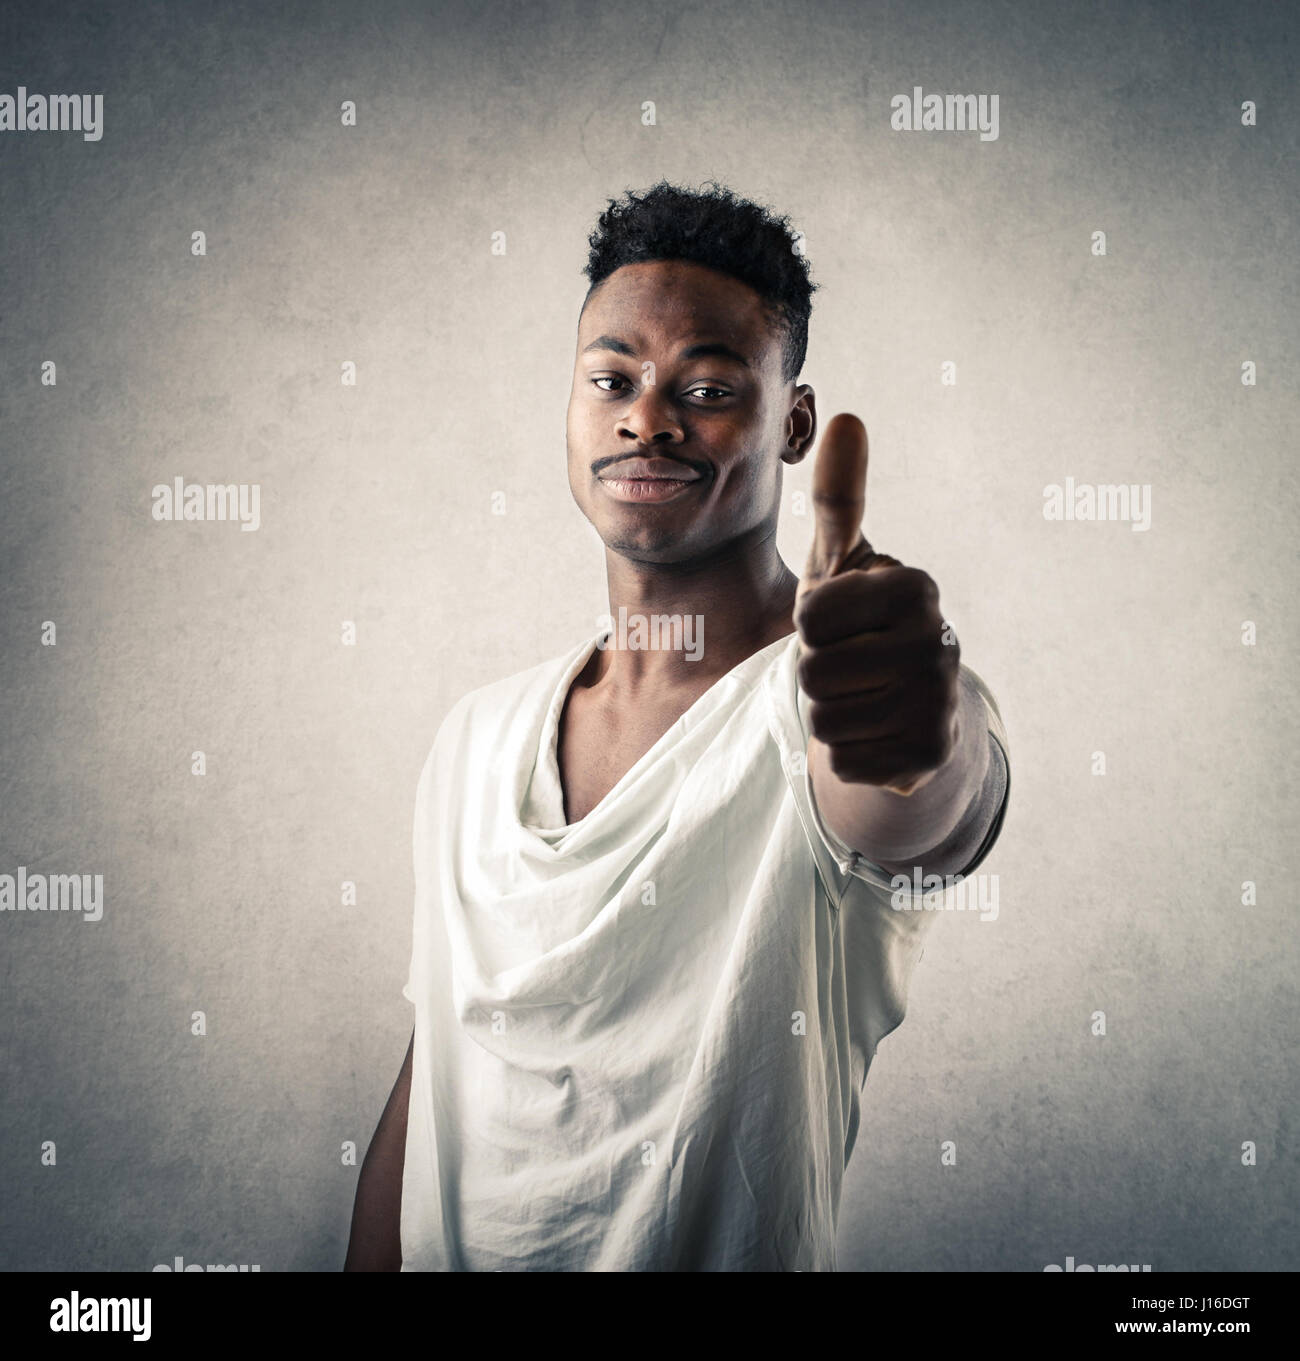 Black man showing like sign Stock Photo